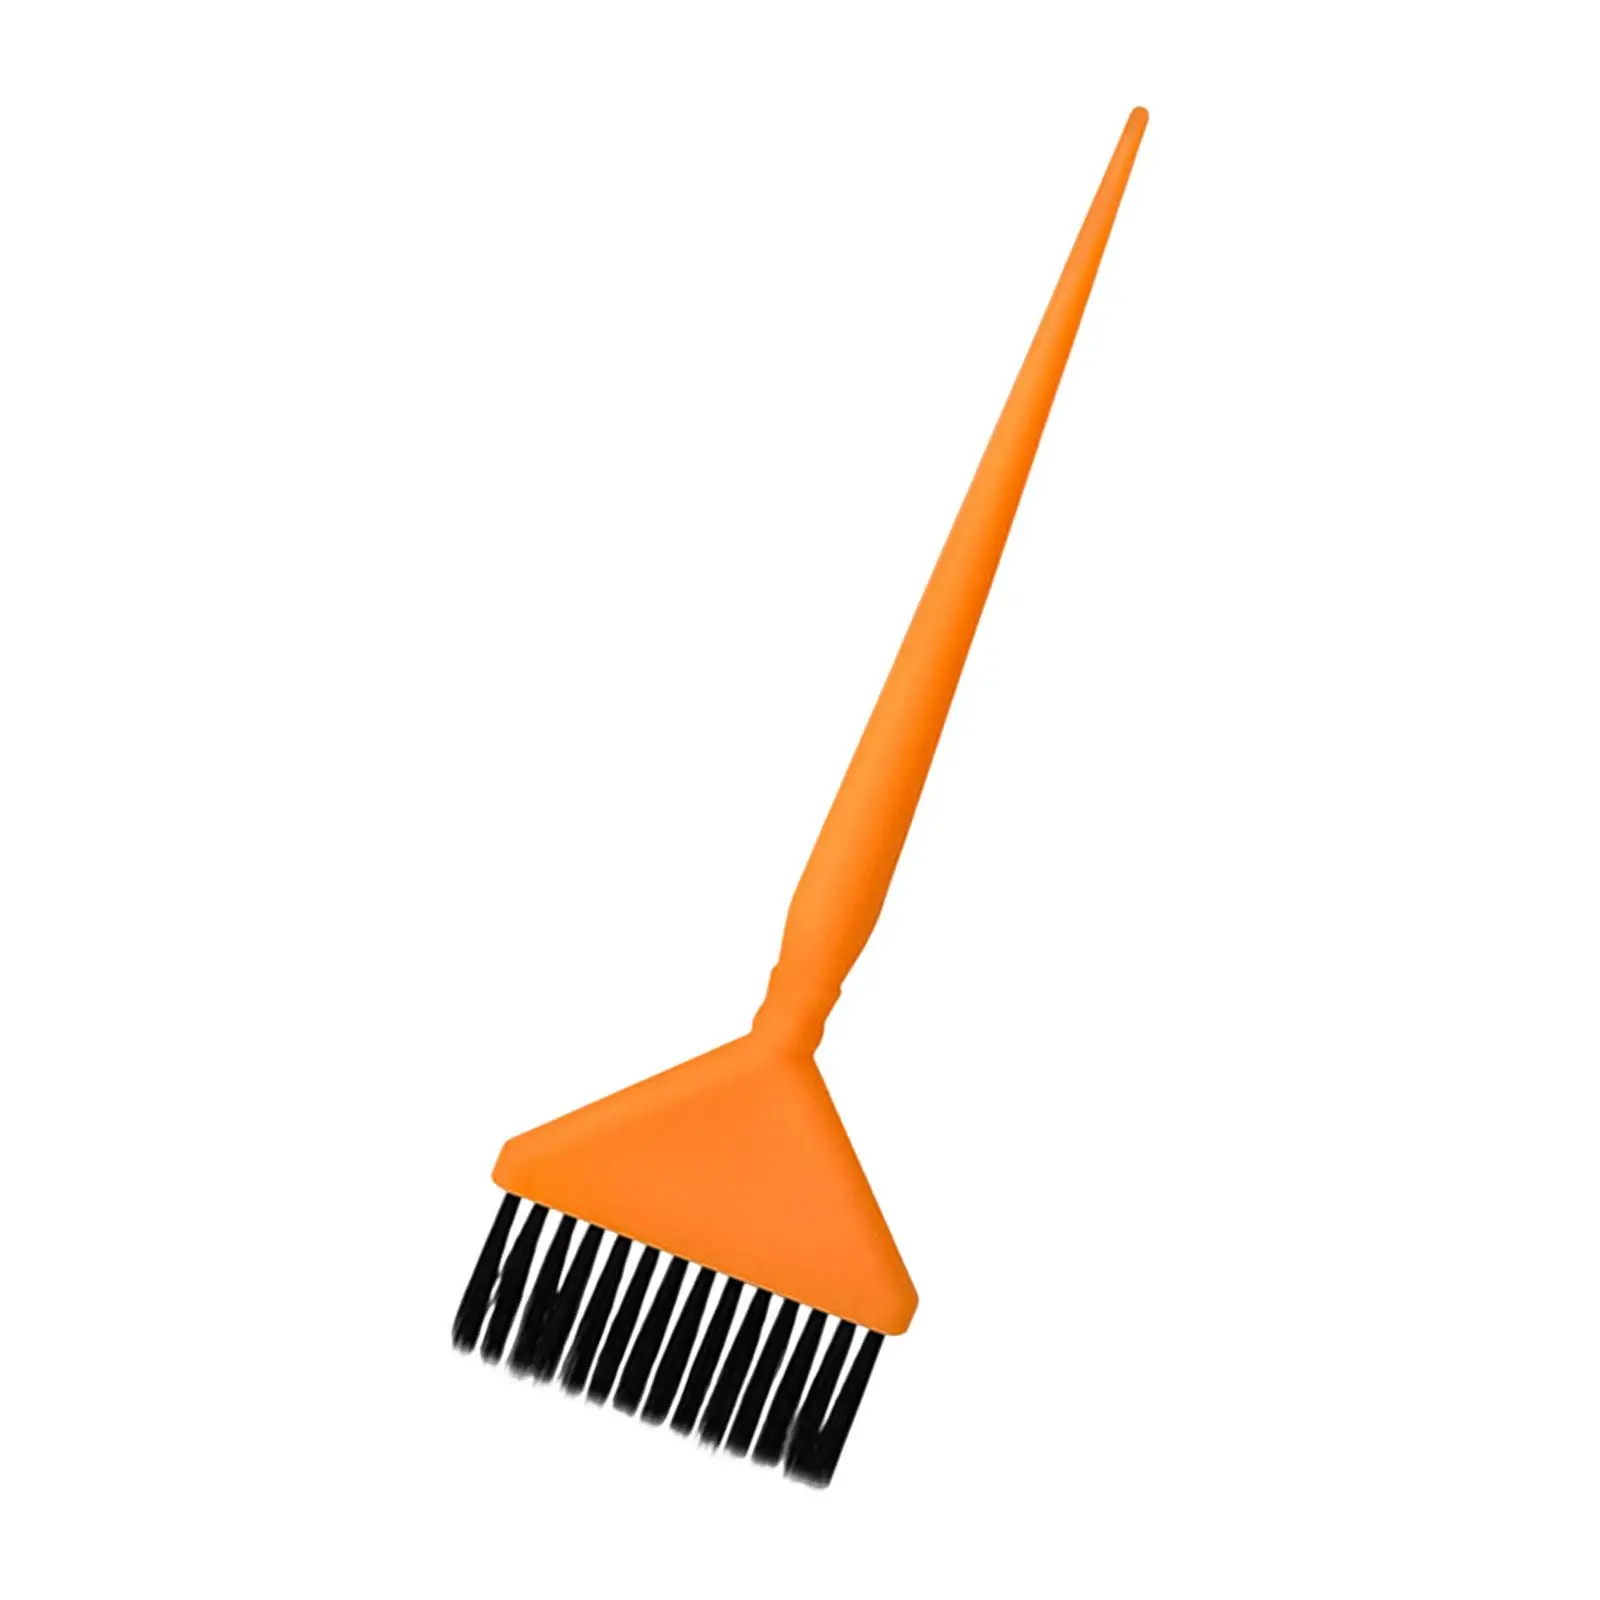 Hair Dye Brushes Barber Tools Large Tint Brush for Home DIY Dyeing Bleaching